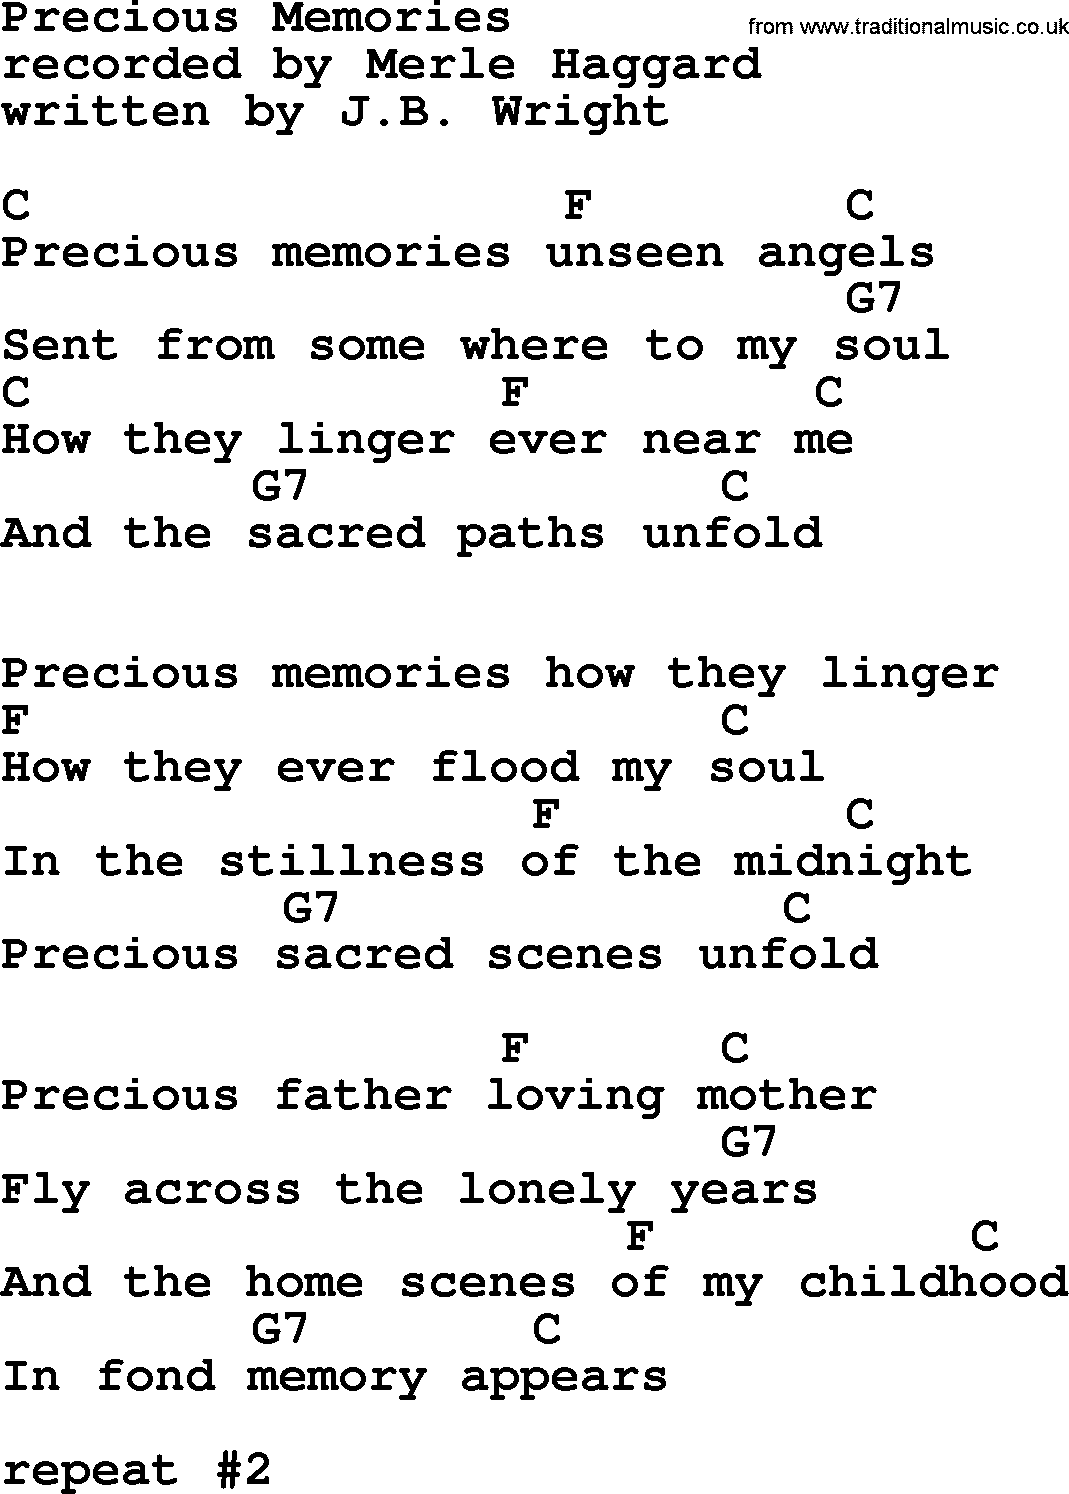 Merle Haggard song: Precious Memories, lyrics and chords